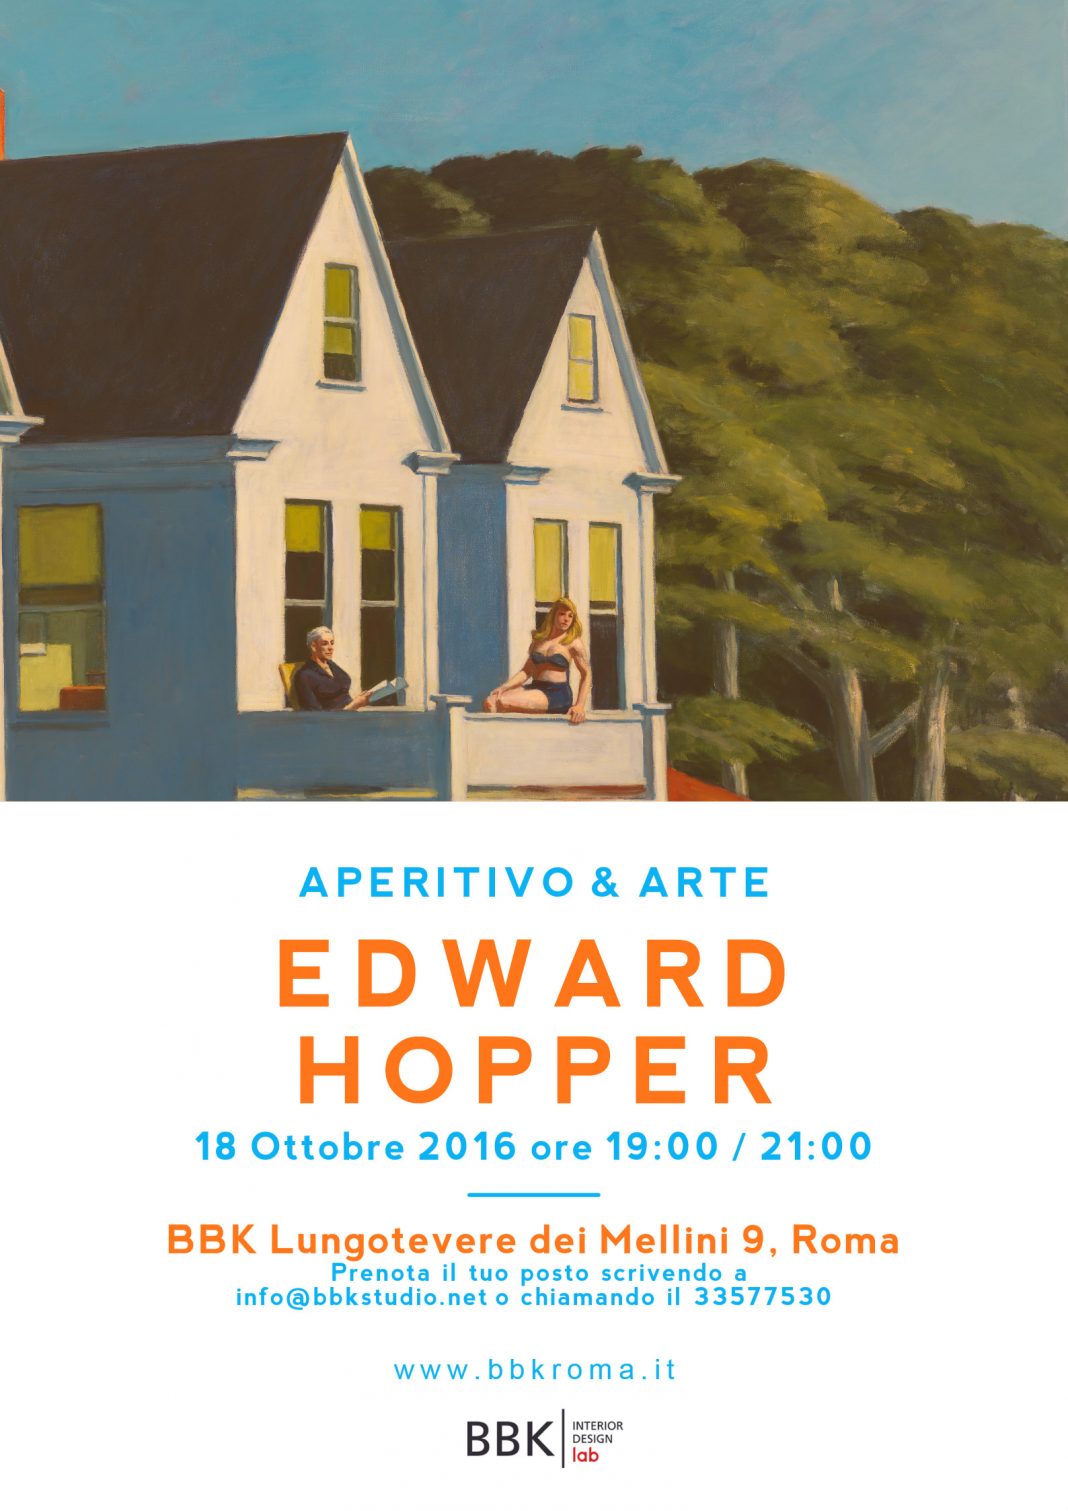 Aperitivo & Arte: Edward Hopperhttps://www.exibart.com/repository/media/eventi/2016/10/aperitivo-038-arte-edward-hopper-1068x1511.jpg